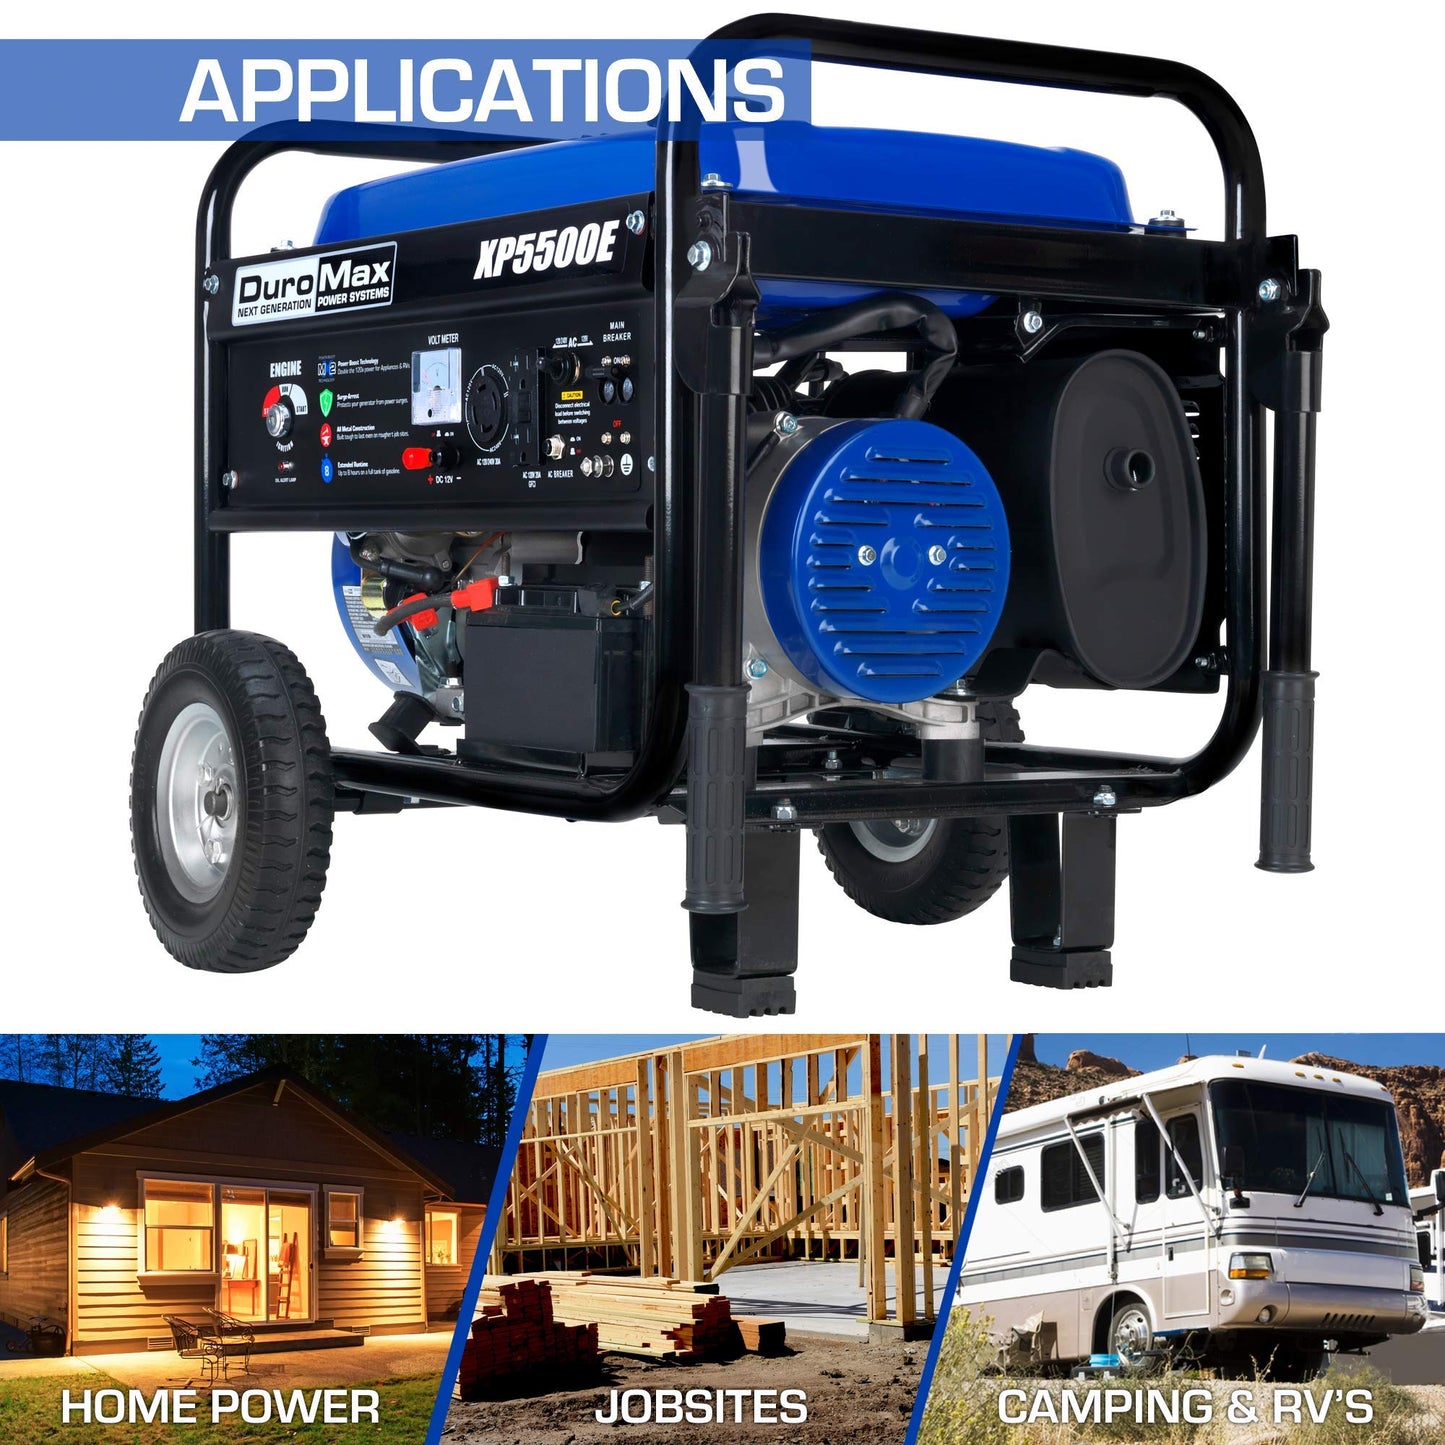 DuroMax XP5500E Gas Powered Portable Generator-5500 Watt Electric Start-Camping & RV Ready, 50 State Approved, Blue/Black 5,500-Watt Gas